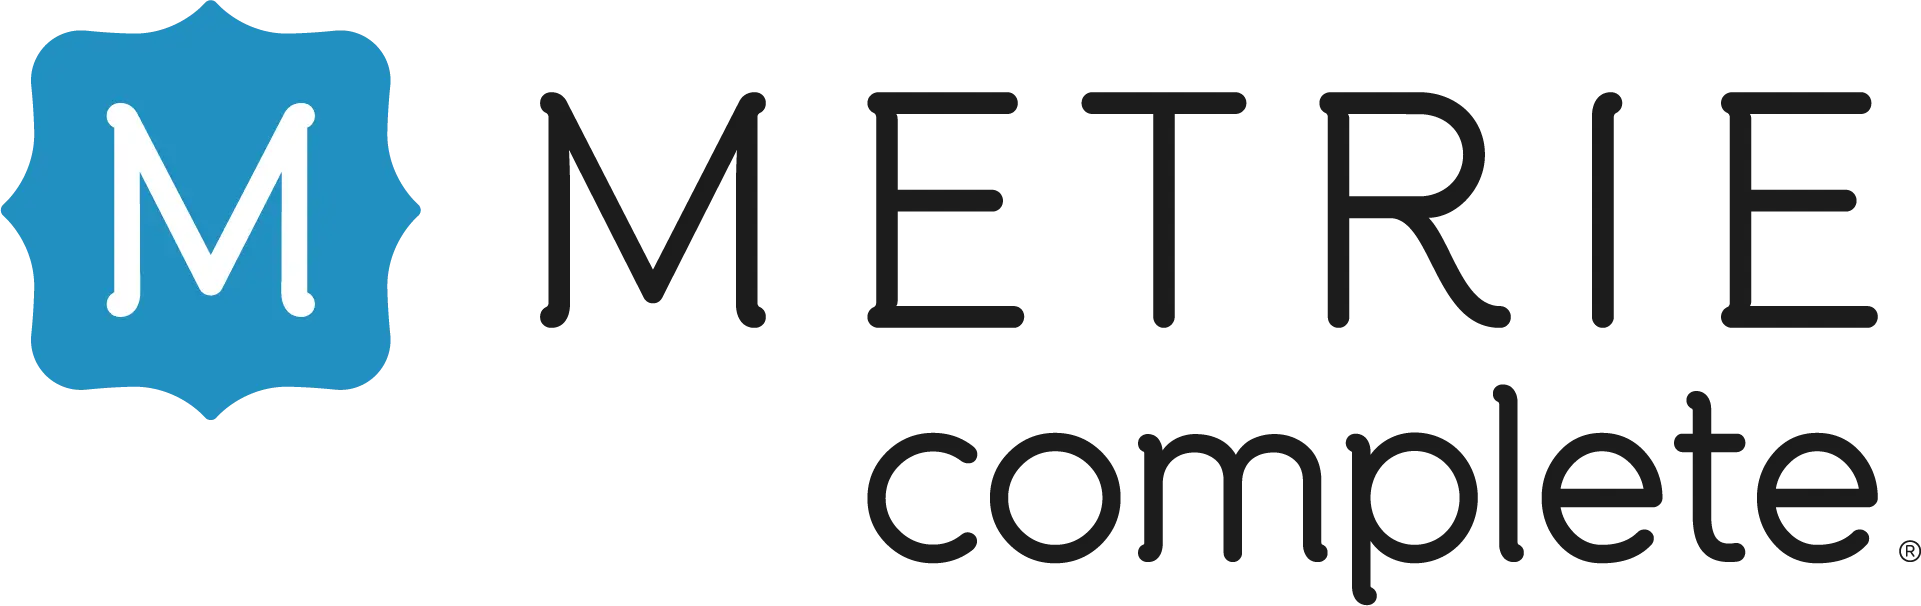 Metrie Complete Horizontal Logo